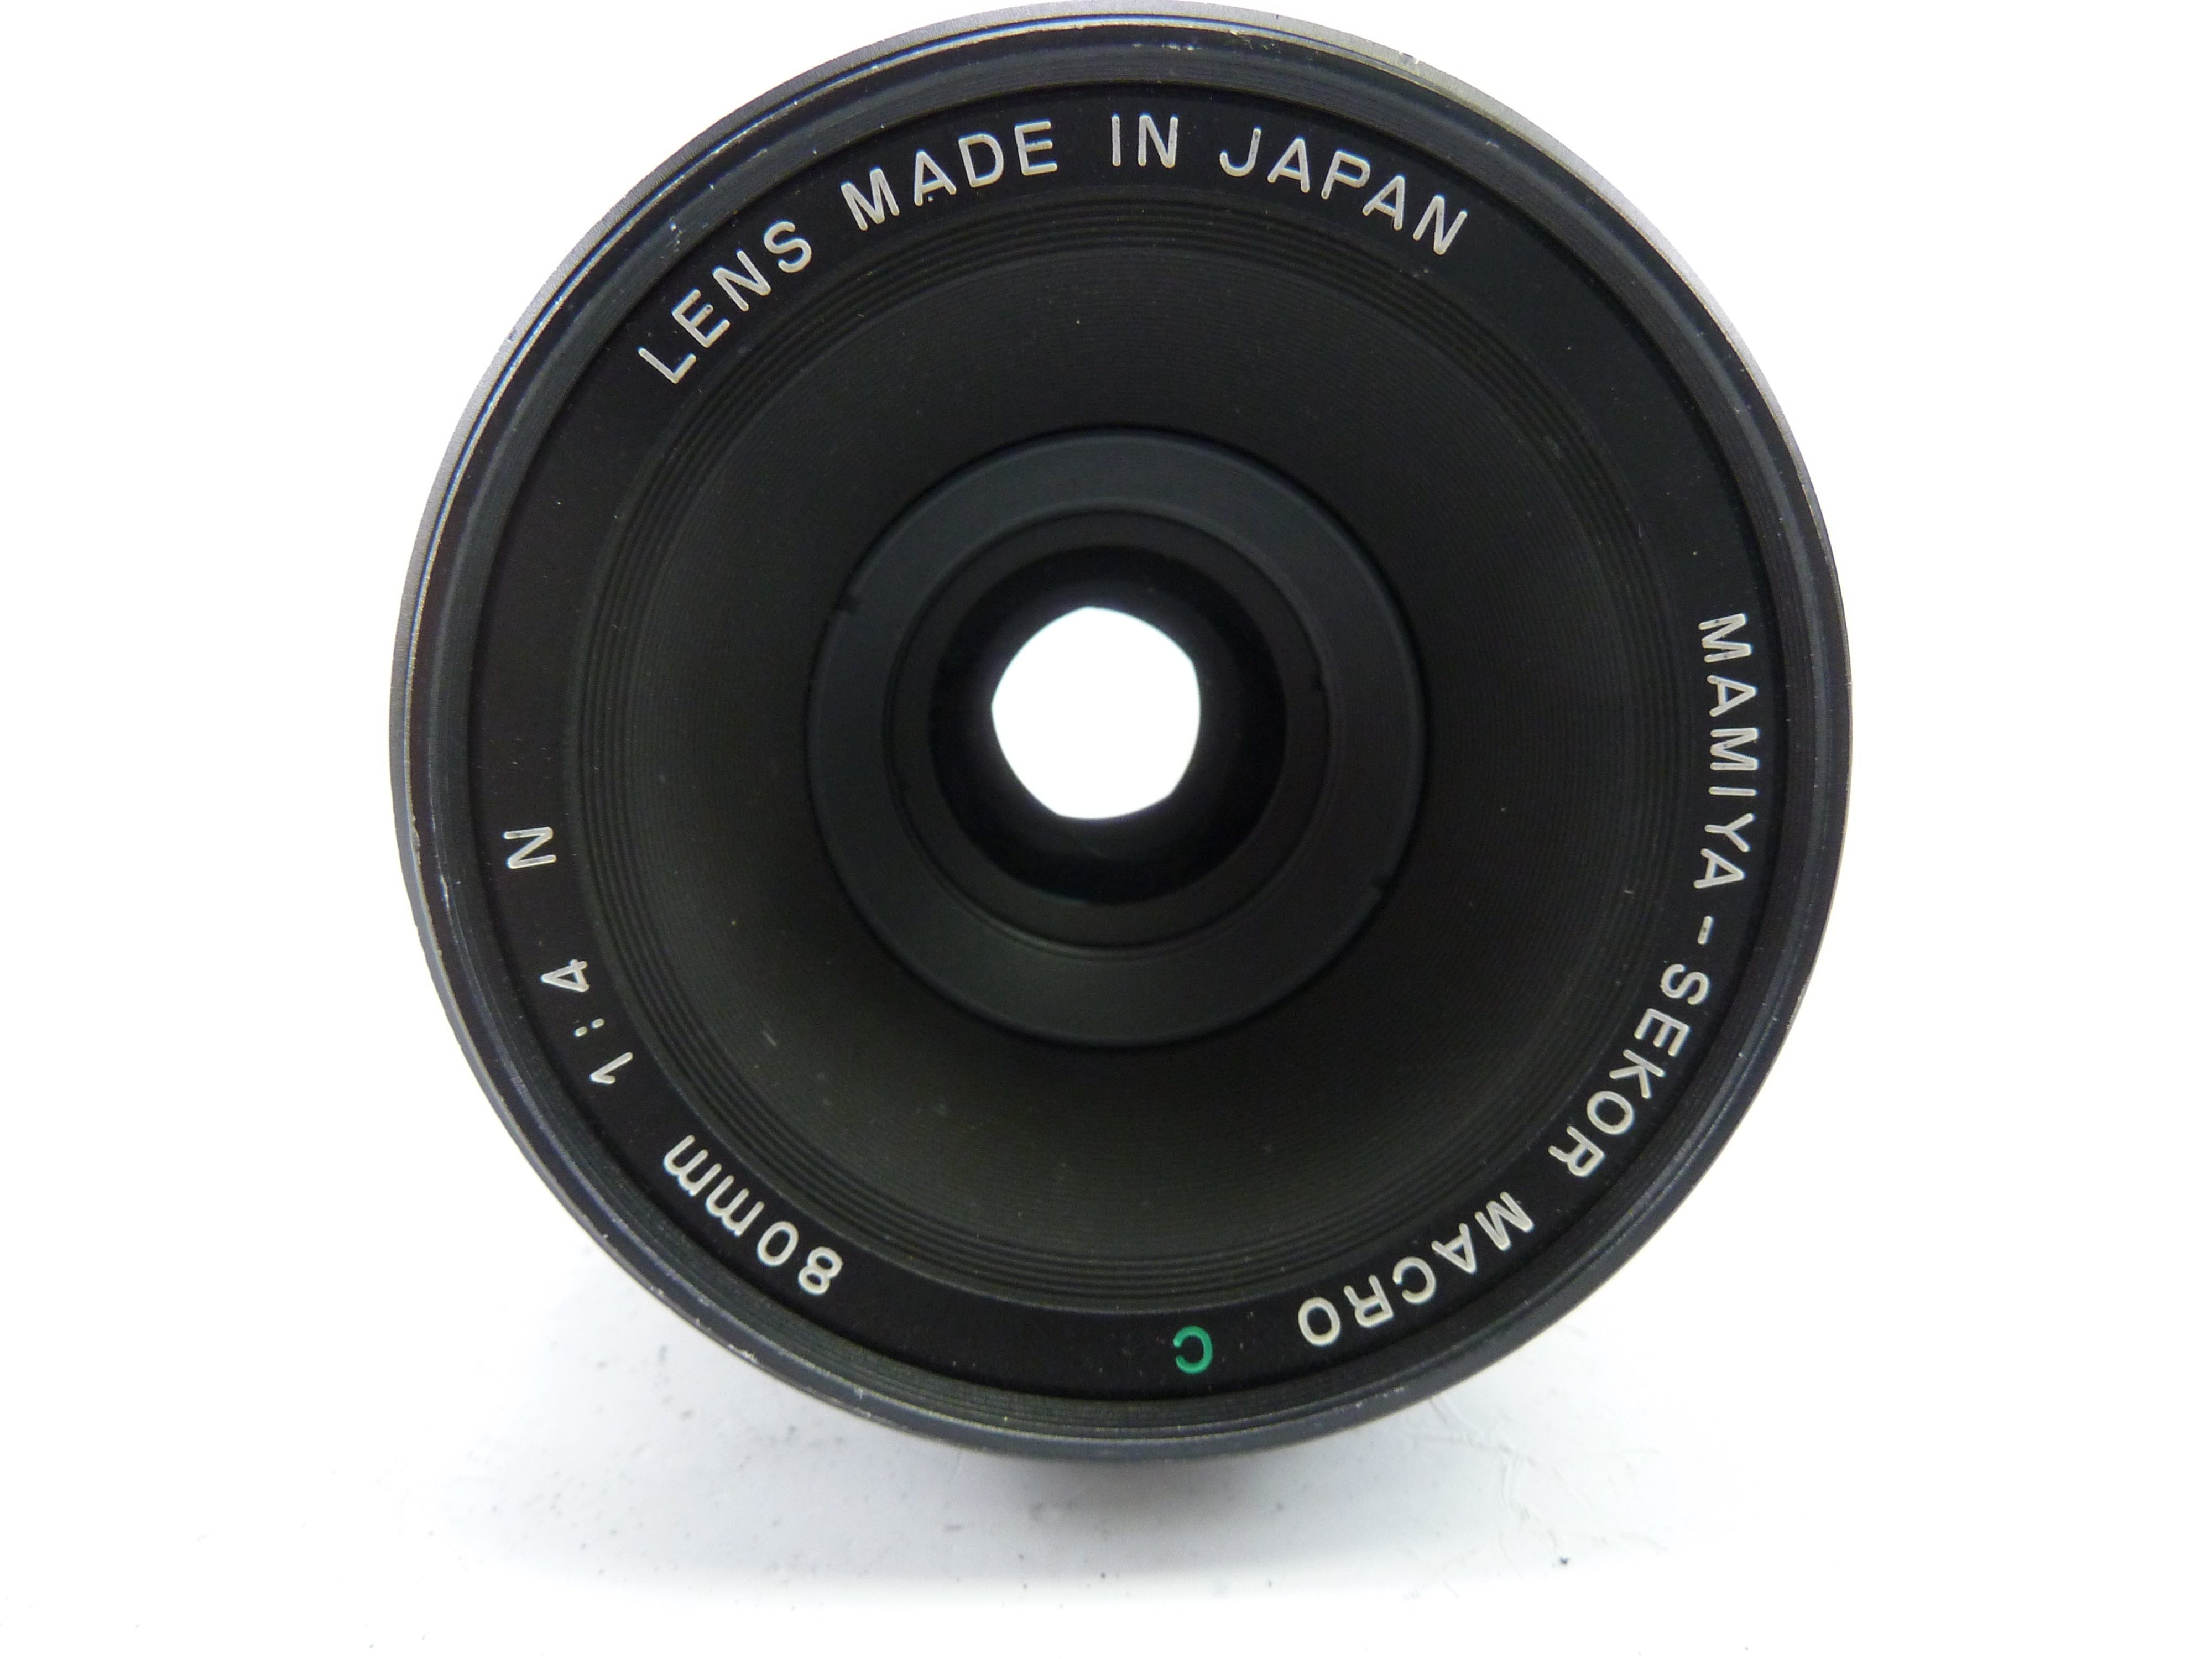 Mamiya 645 Pro 80MM F4 N Series Macro Lens